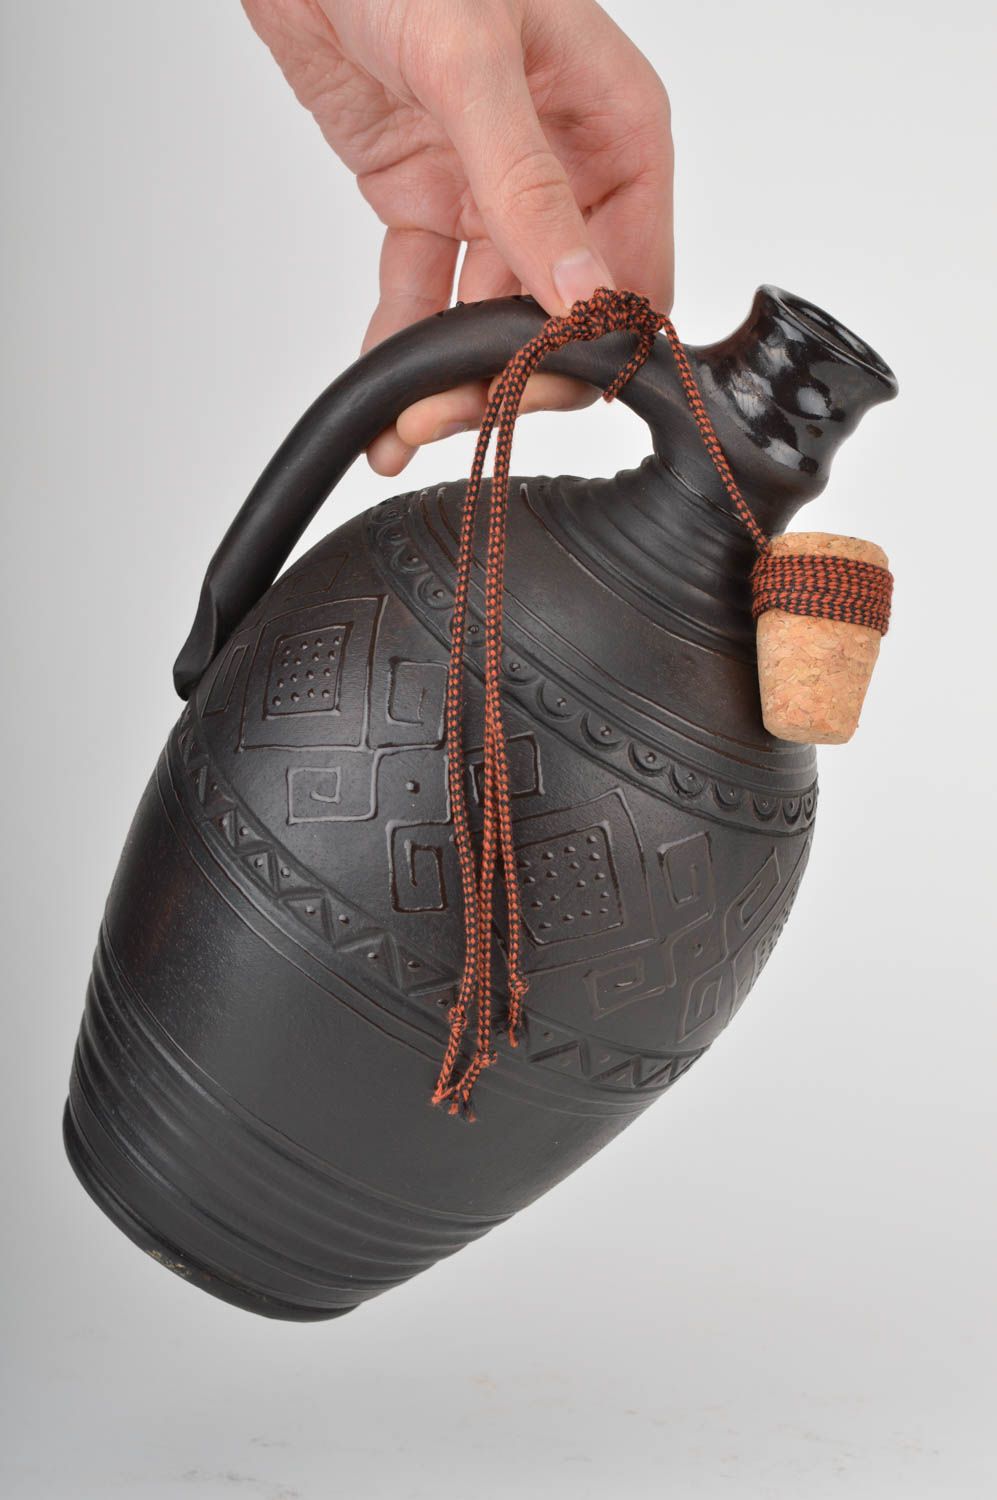 Botella cerámica con ornamento y corcho decorativa artesanal marrón oscura 2l foto 3